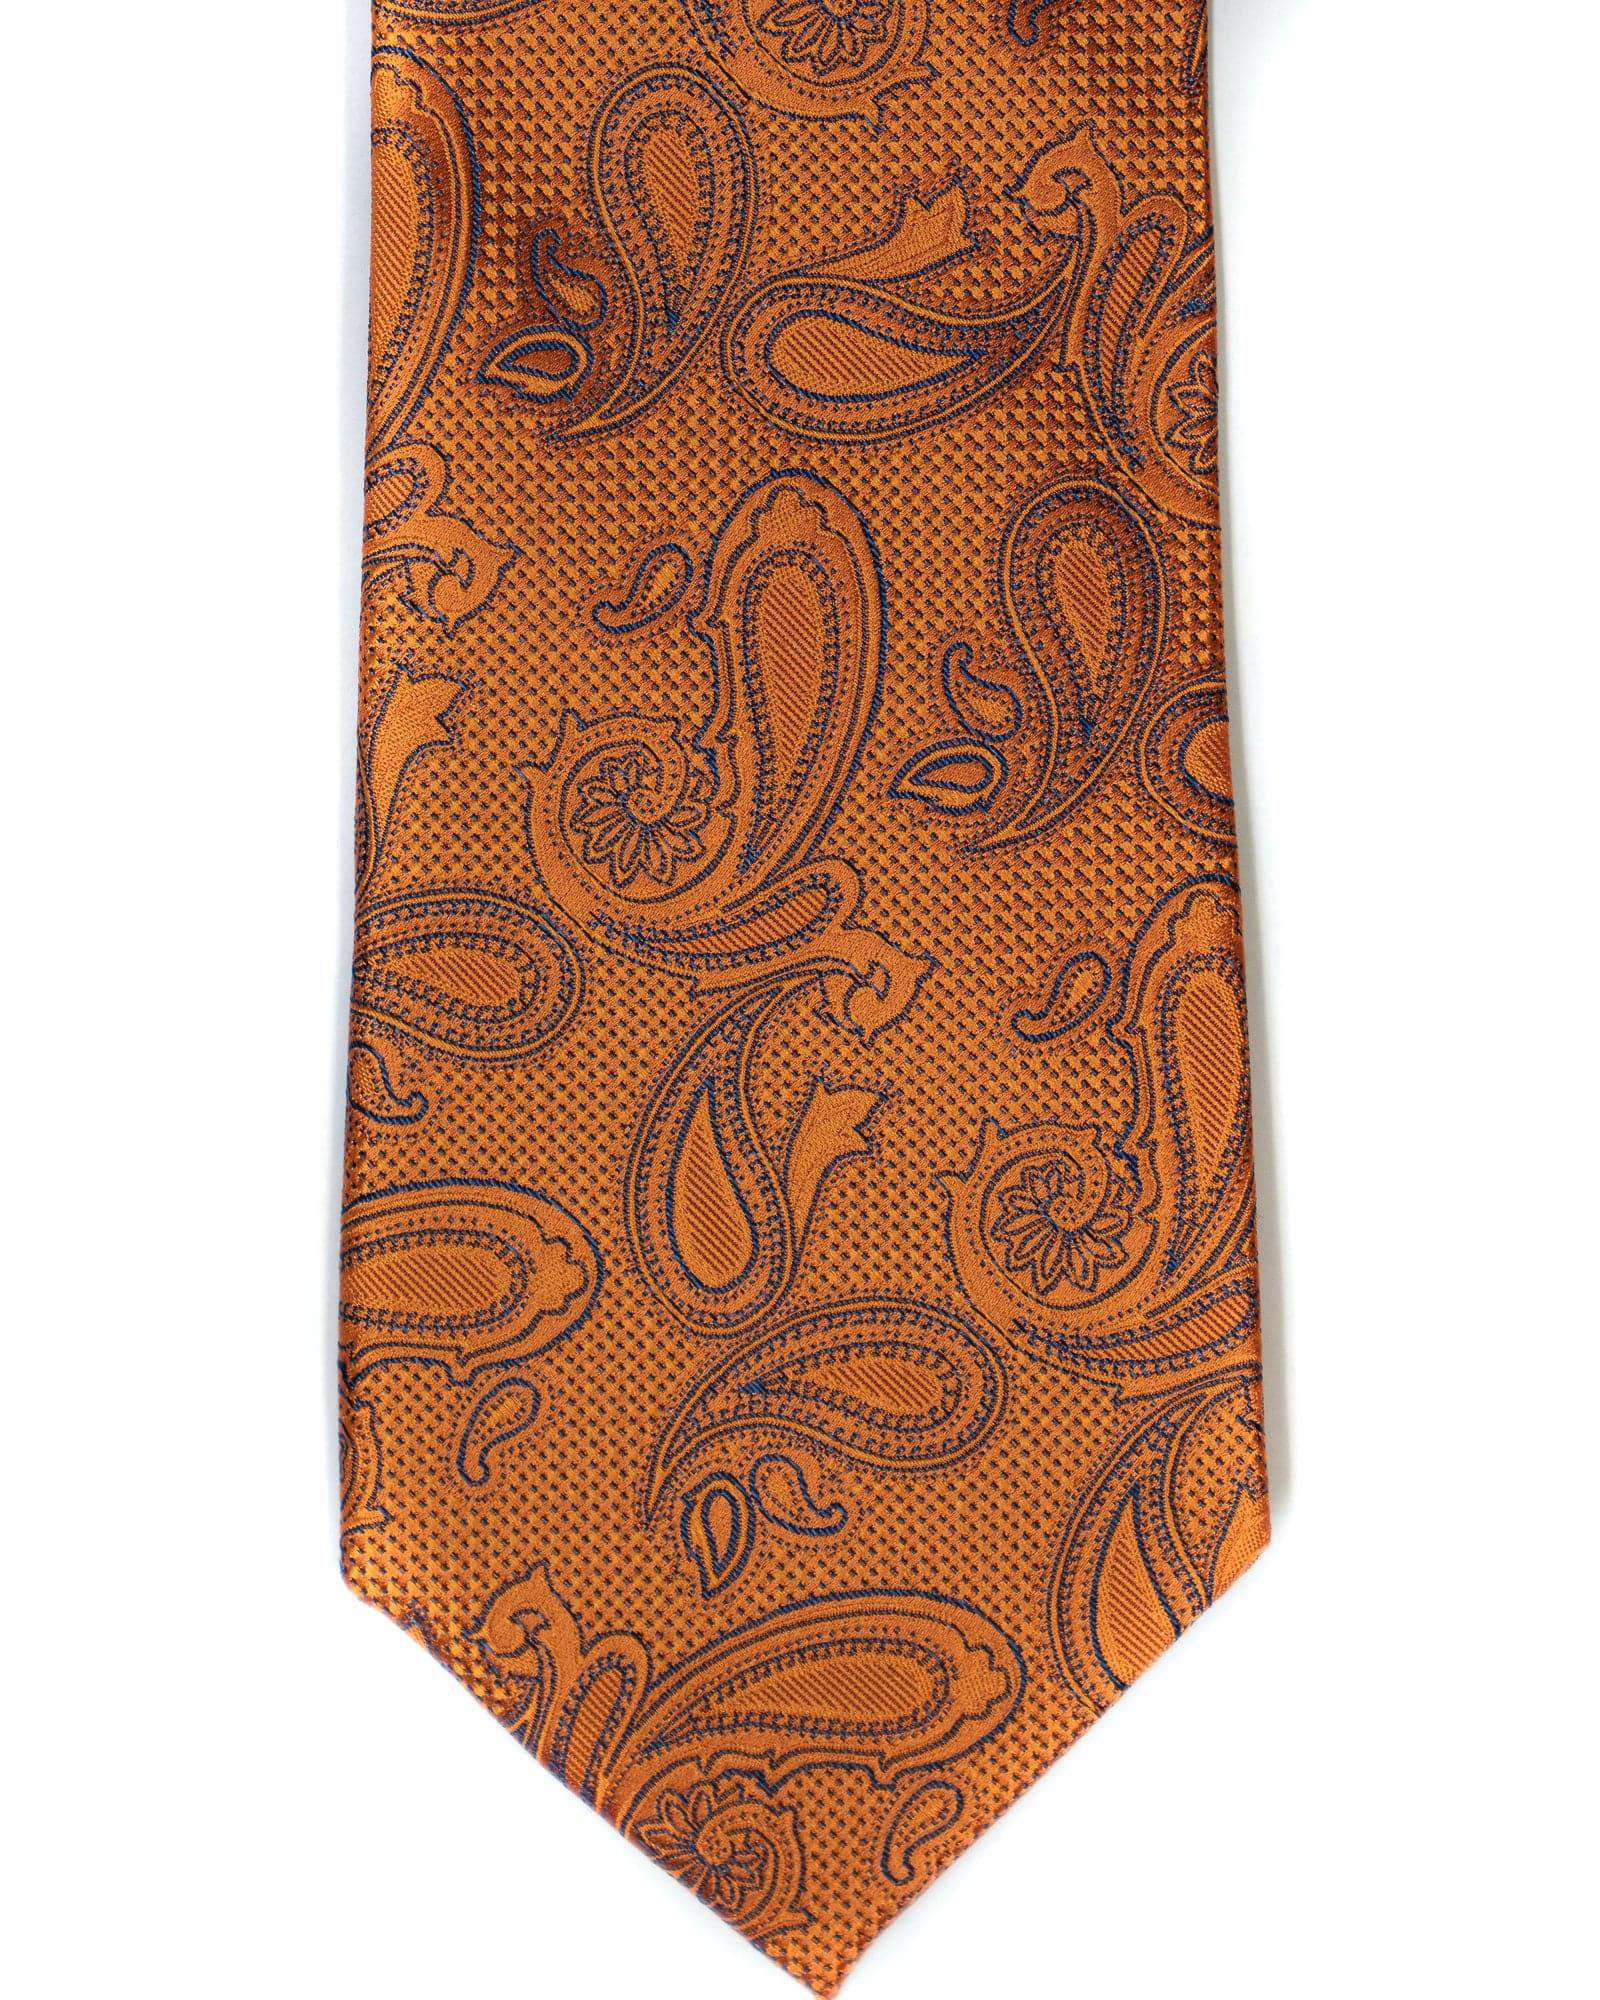 Paisley Silk Tie in Orange With Navy - Rainwater's Men's Clothing and Tuxedo Rental